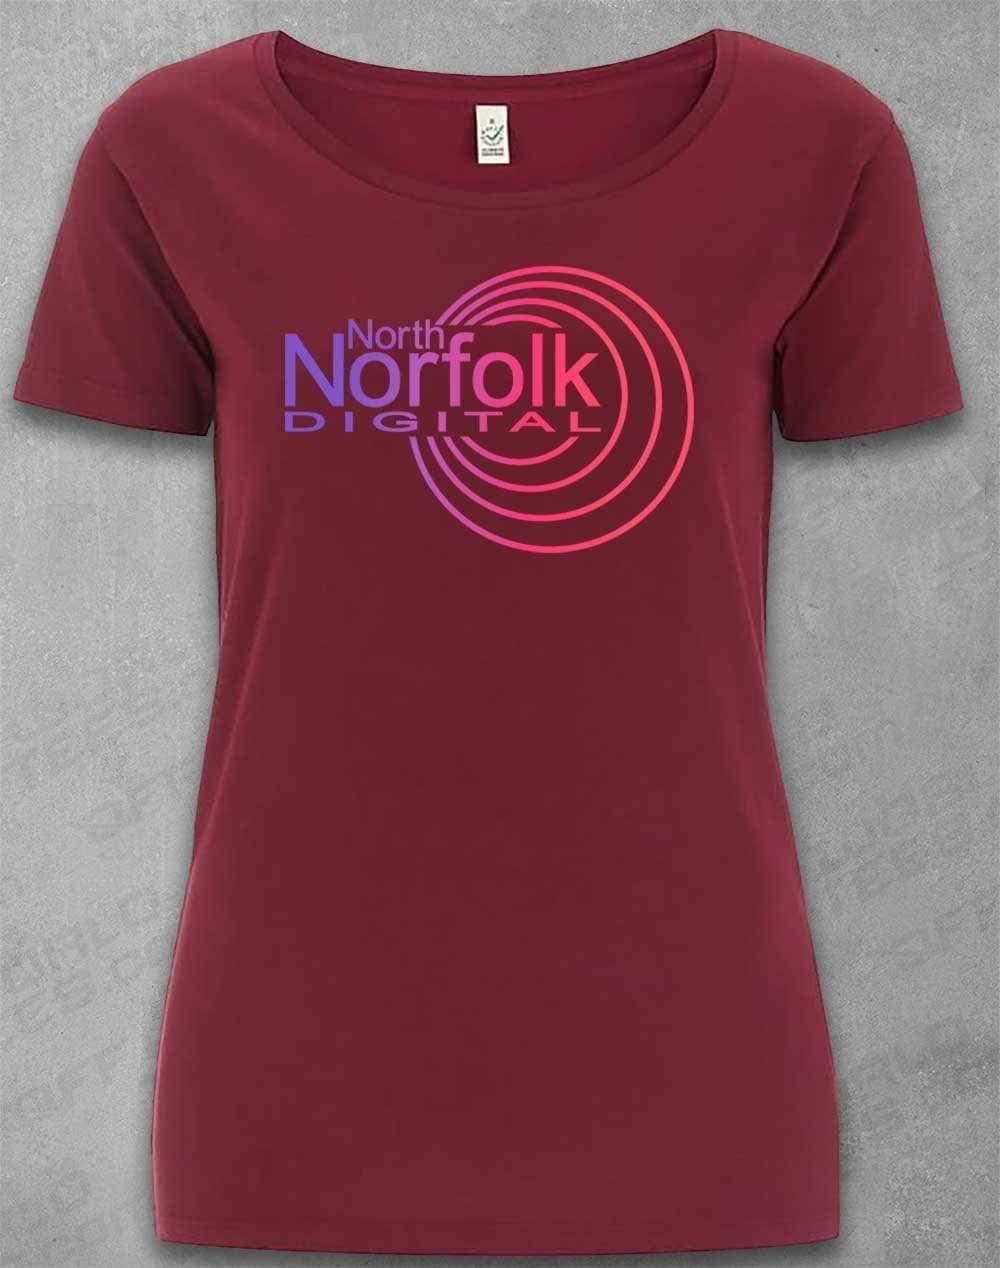 DELUXE North Norfolk Digital Organic Scoop Neck T-Shirt 8-10 / Burgundy  - Off World Tees